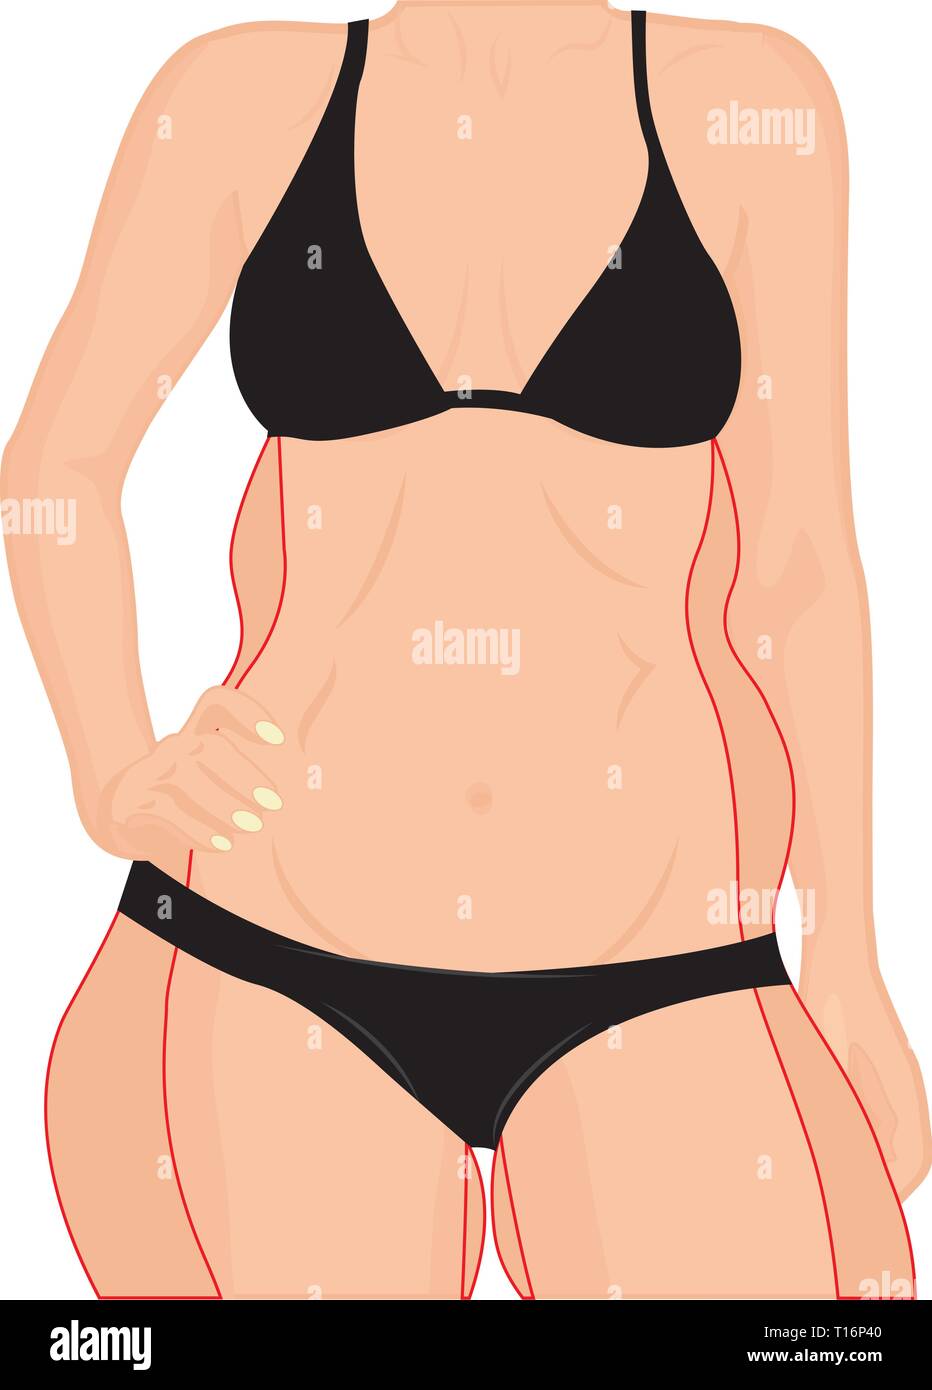 Body Correction woman figure. Get slim. Body shaping. Liposuction